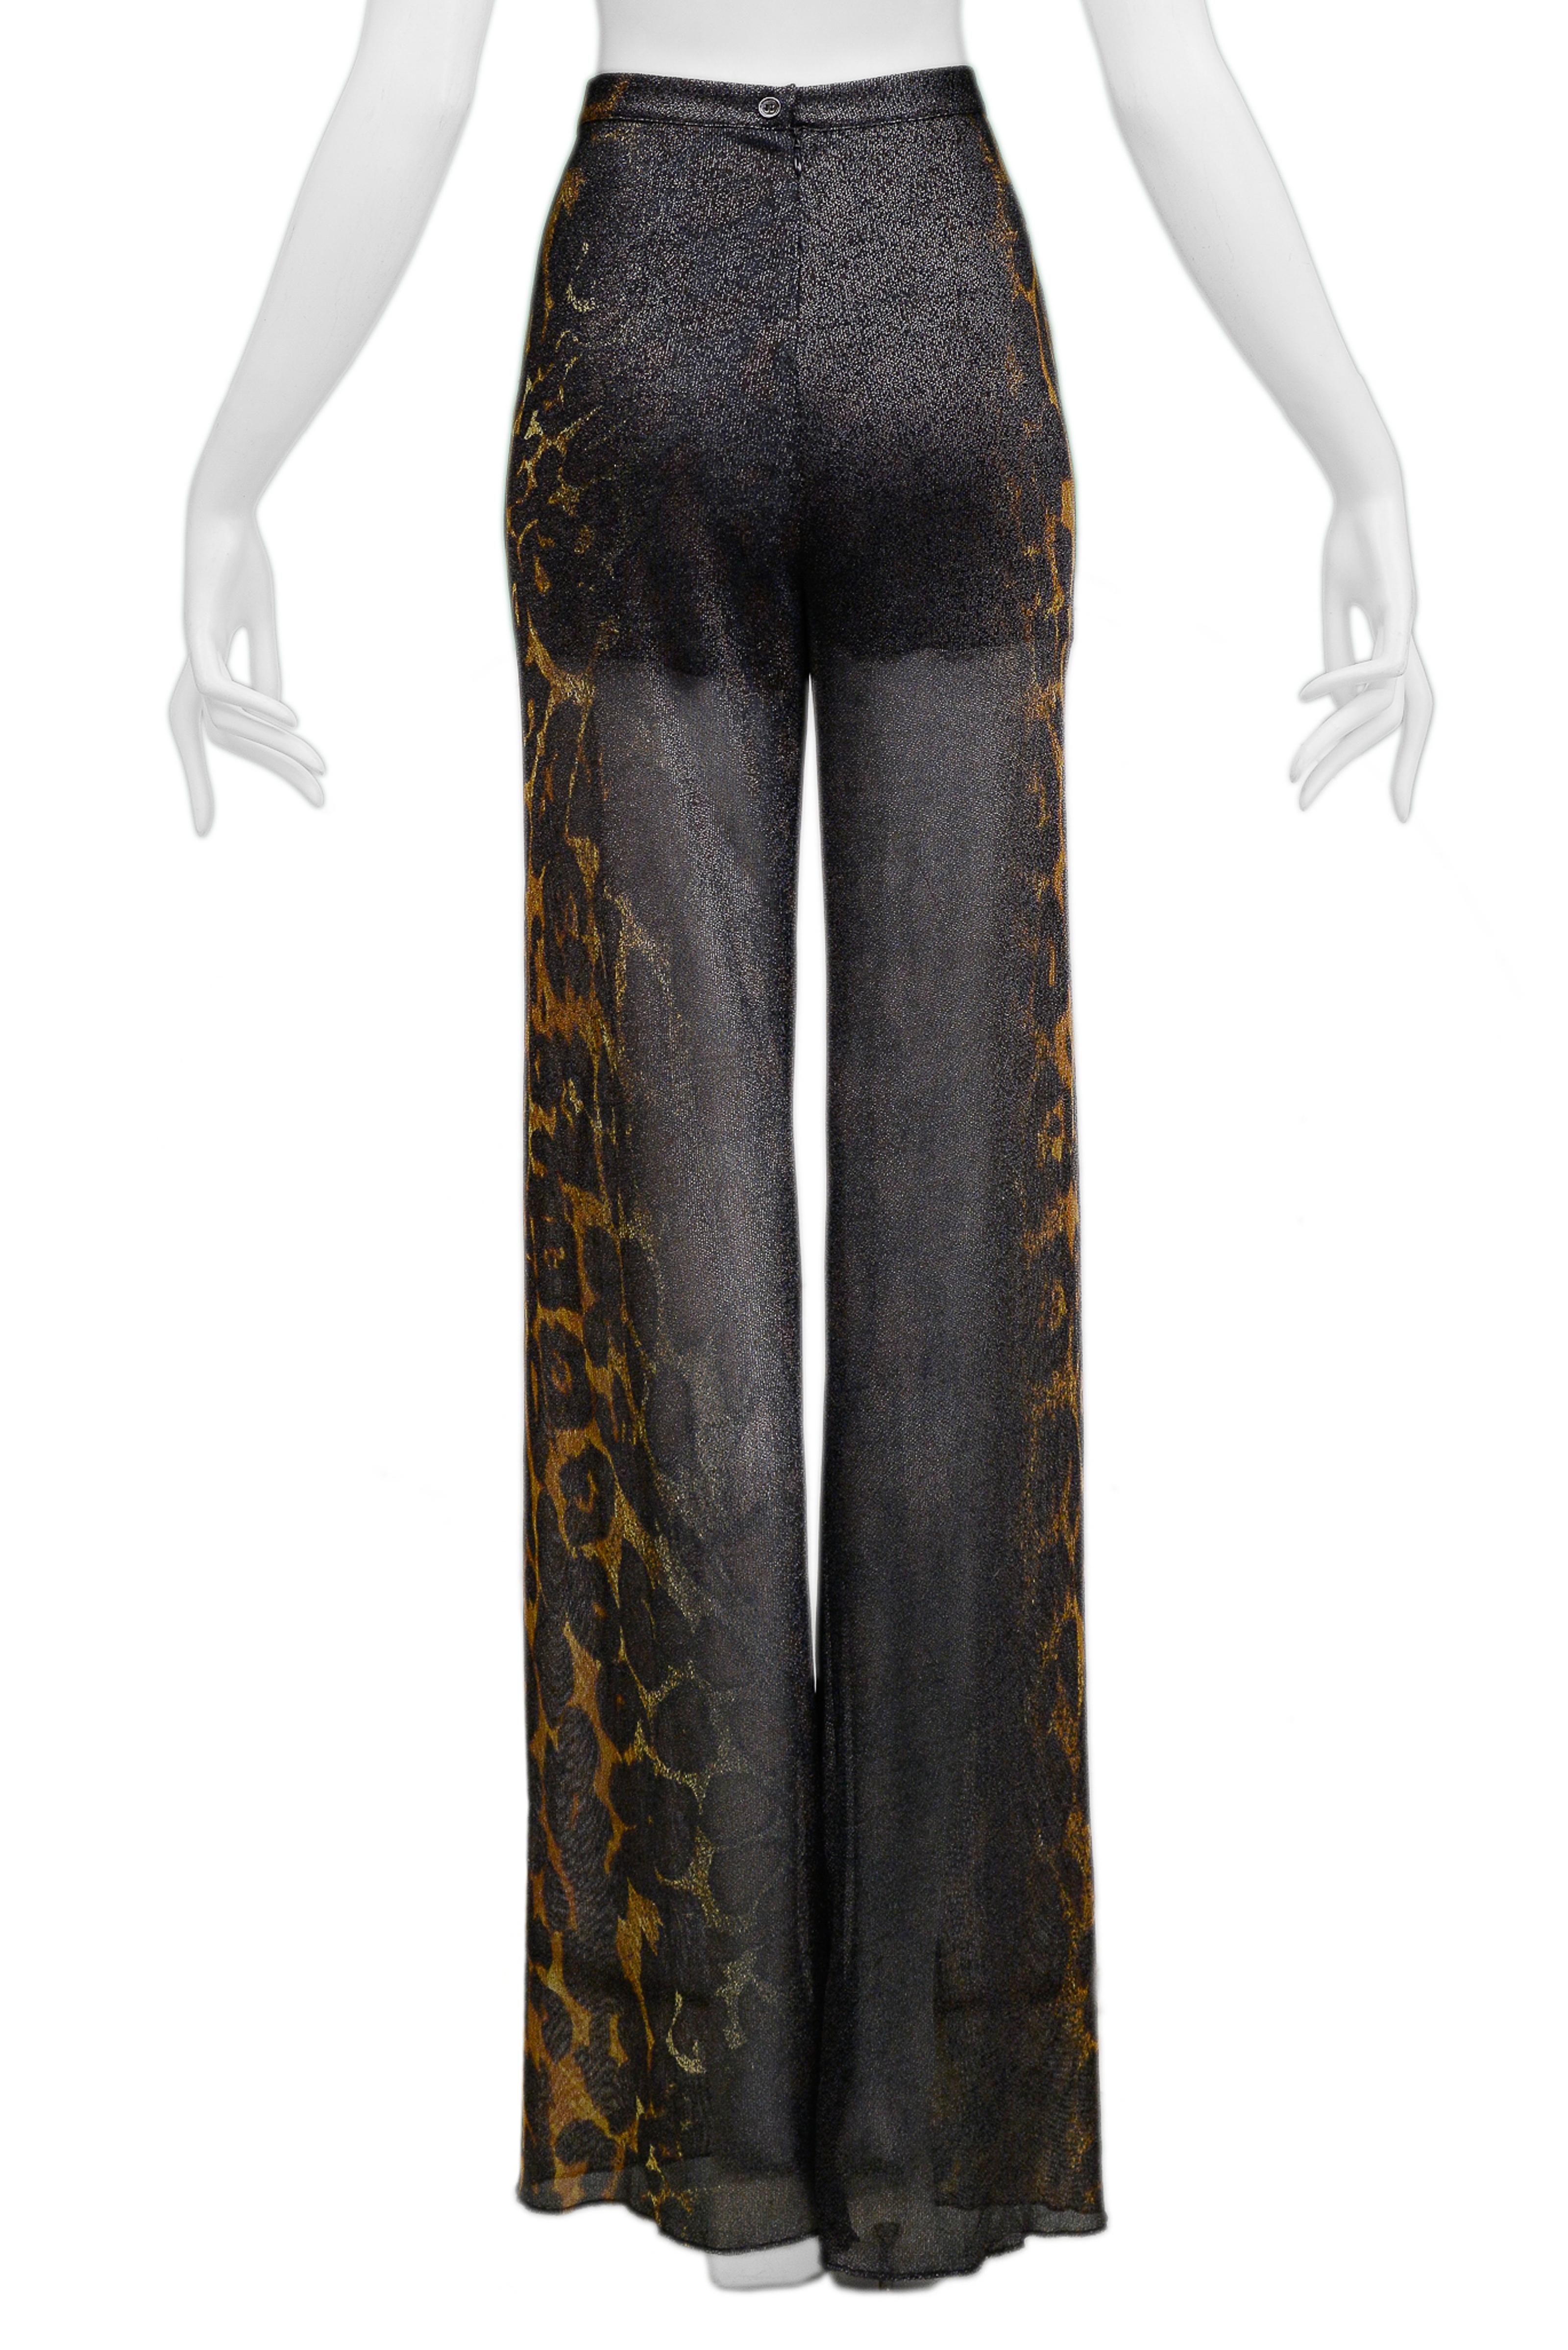 Gianfranco Ferre Black & Leopard Print Sheer Lurex Disco Pants 6